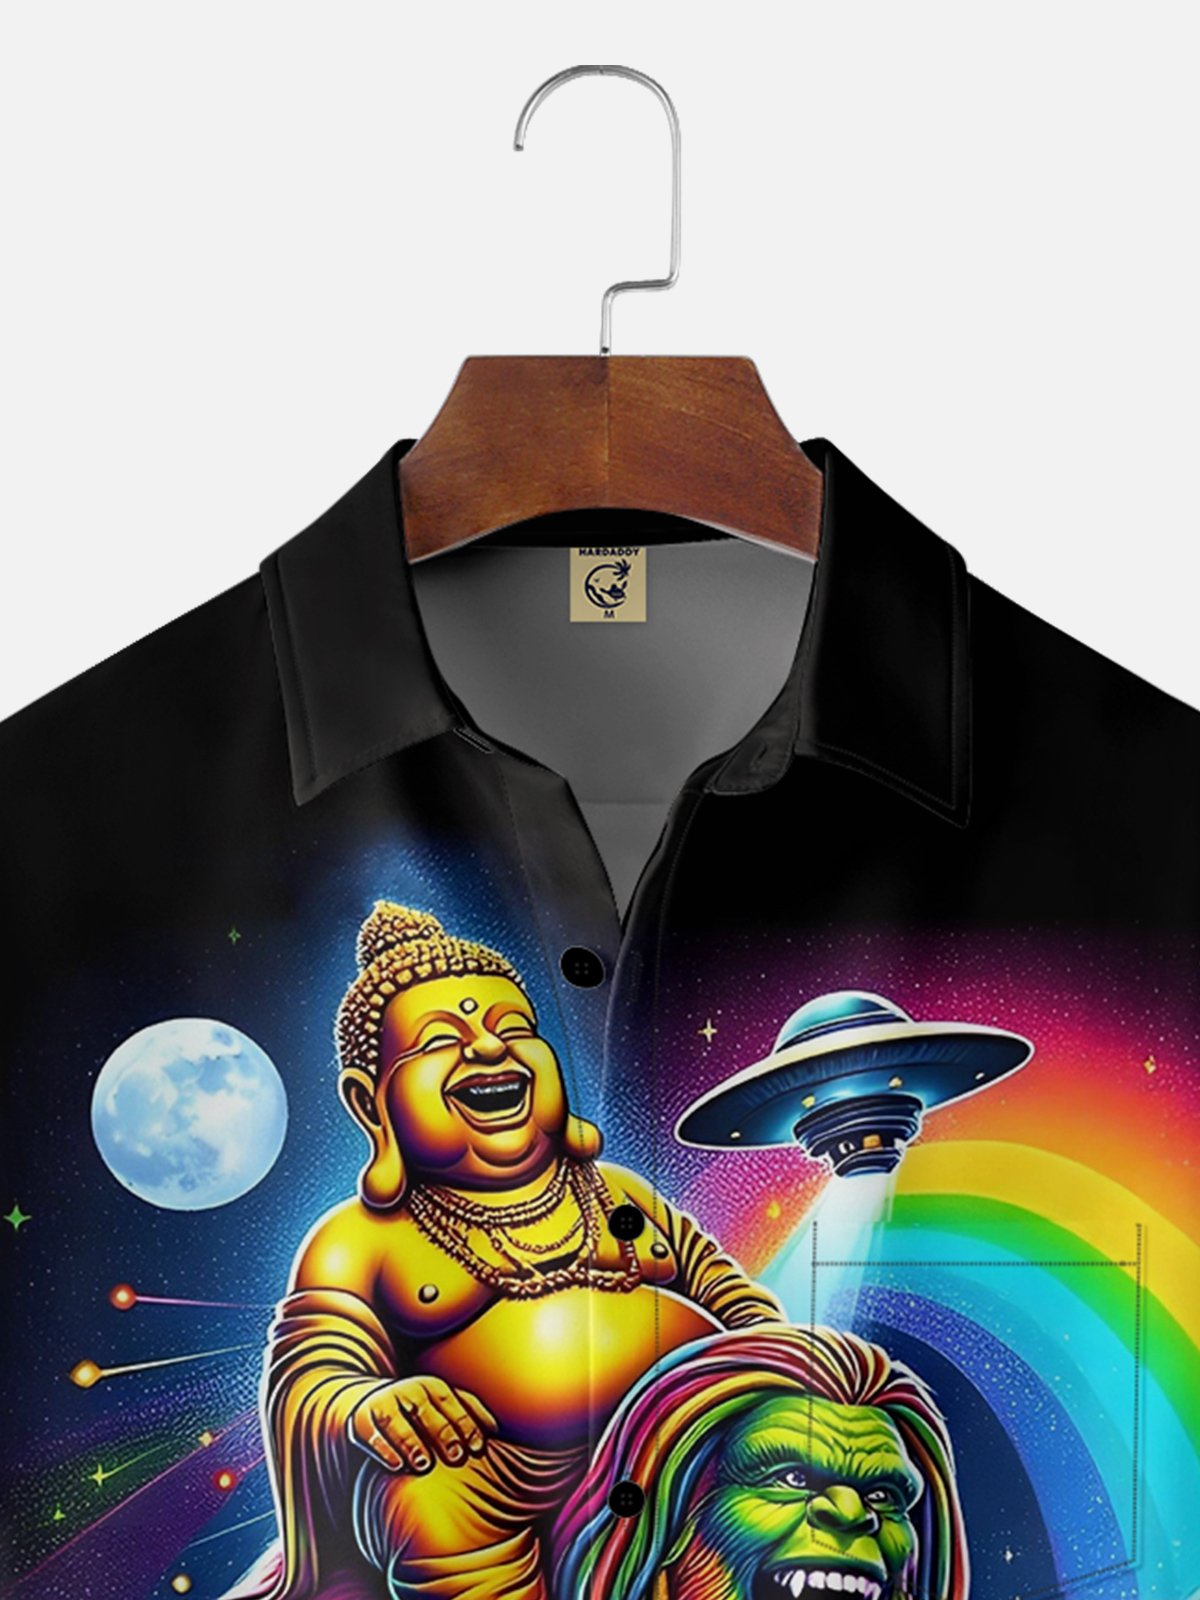 Moisture-wicking Rainbow Hippie Bigfoot Chest Pocket Hawaiian Shirt